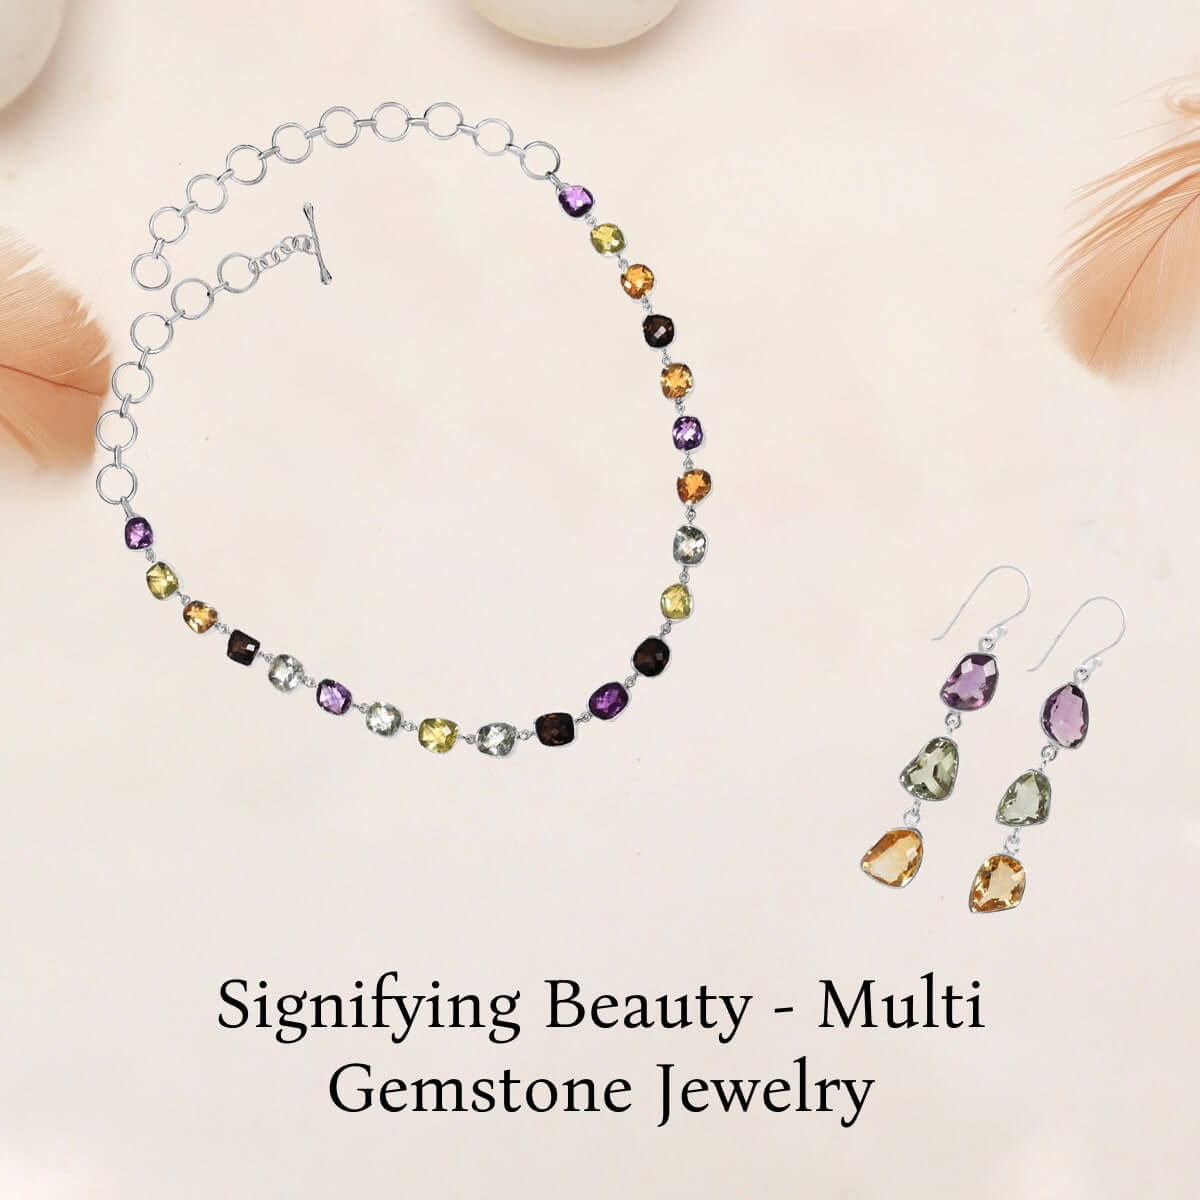 Representative Implications of Multi Gemstone Jewelry